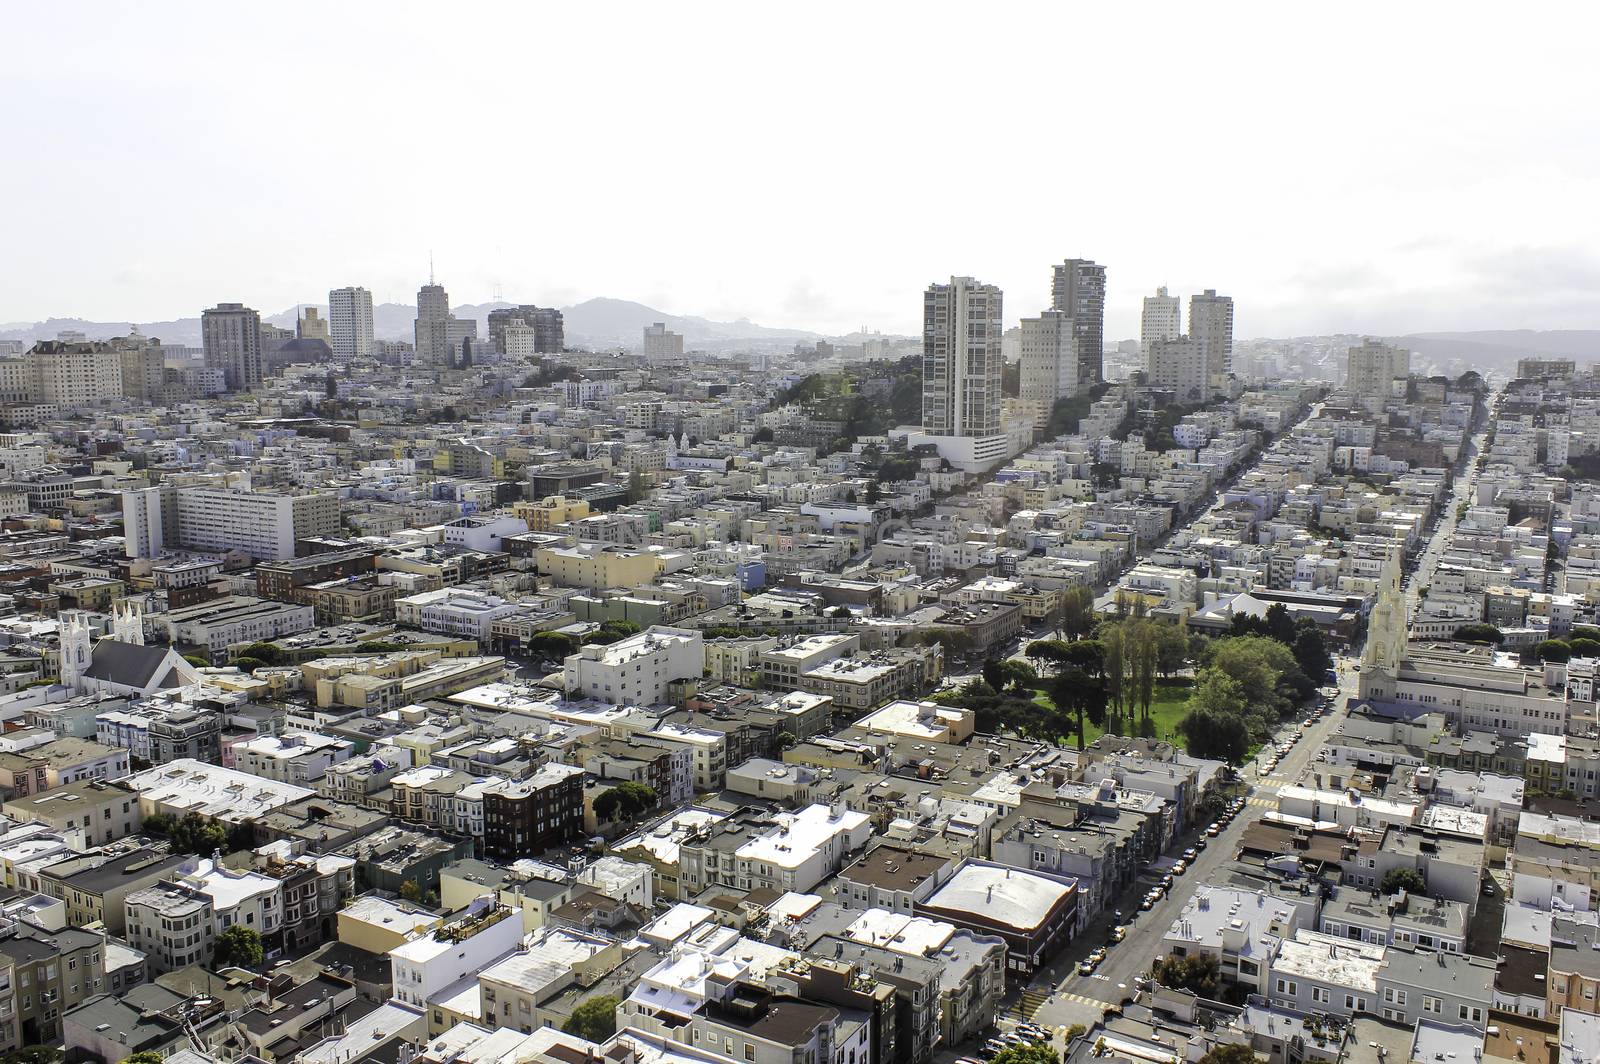 San Francisco suburbs by keneaster